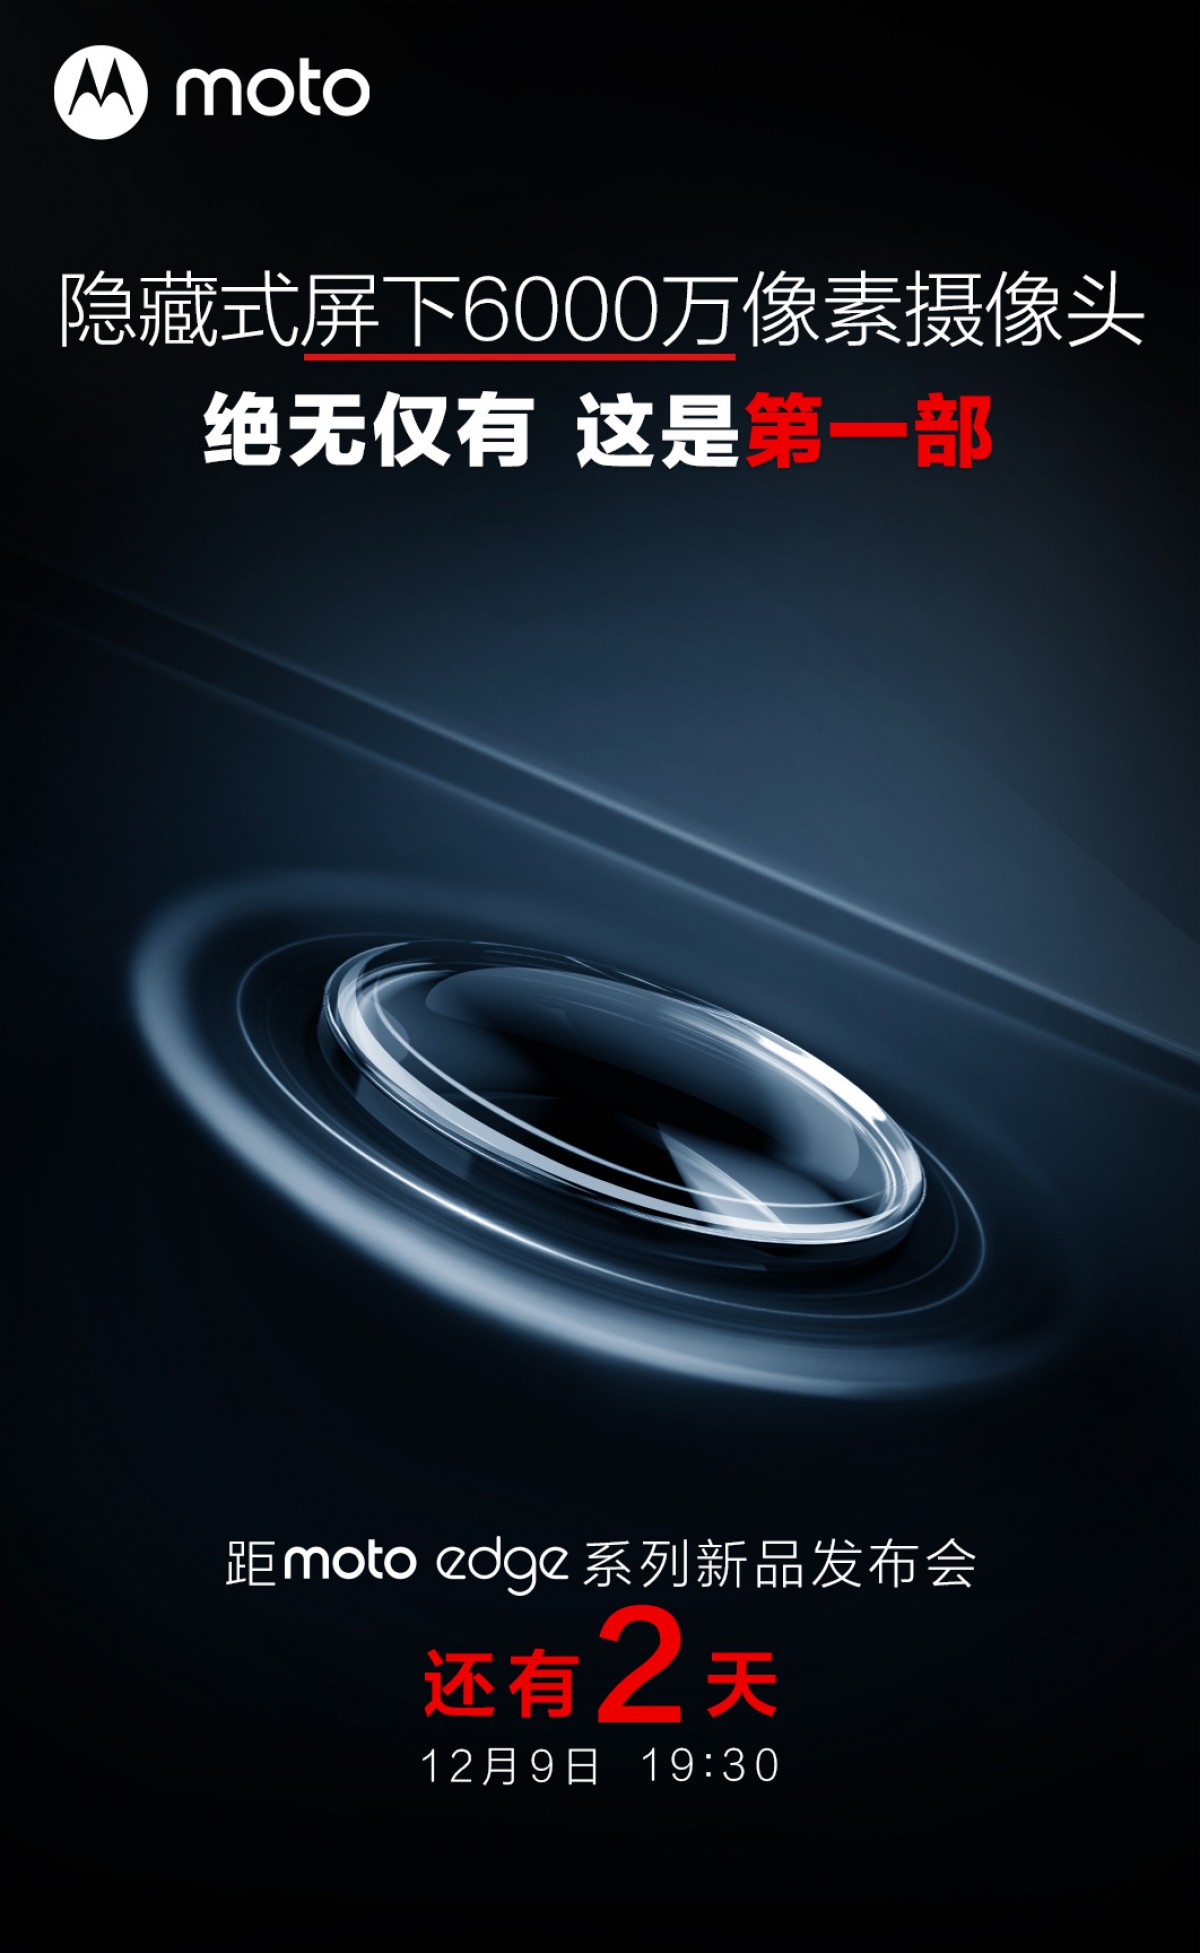  Motorola via Weibo